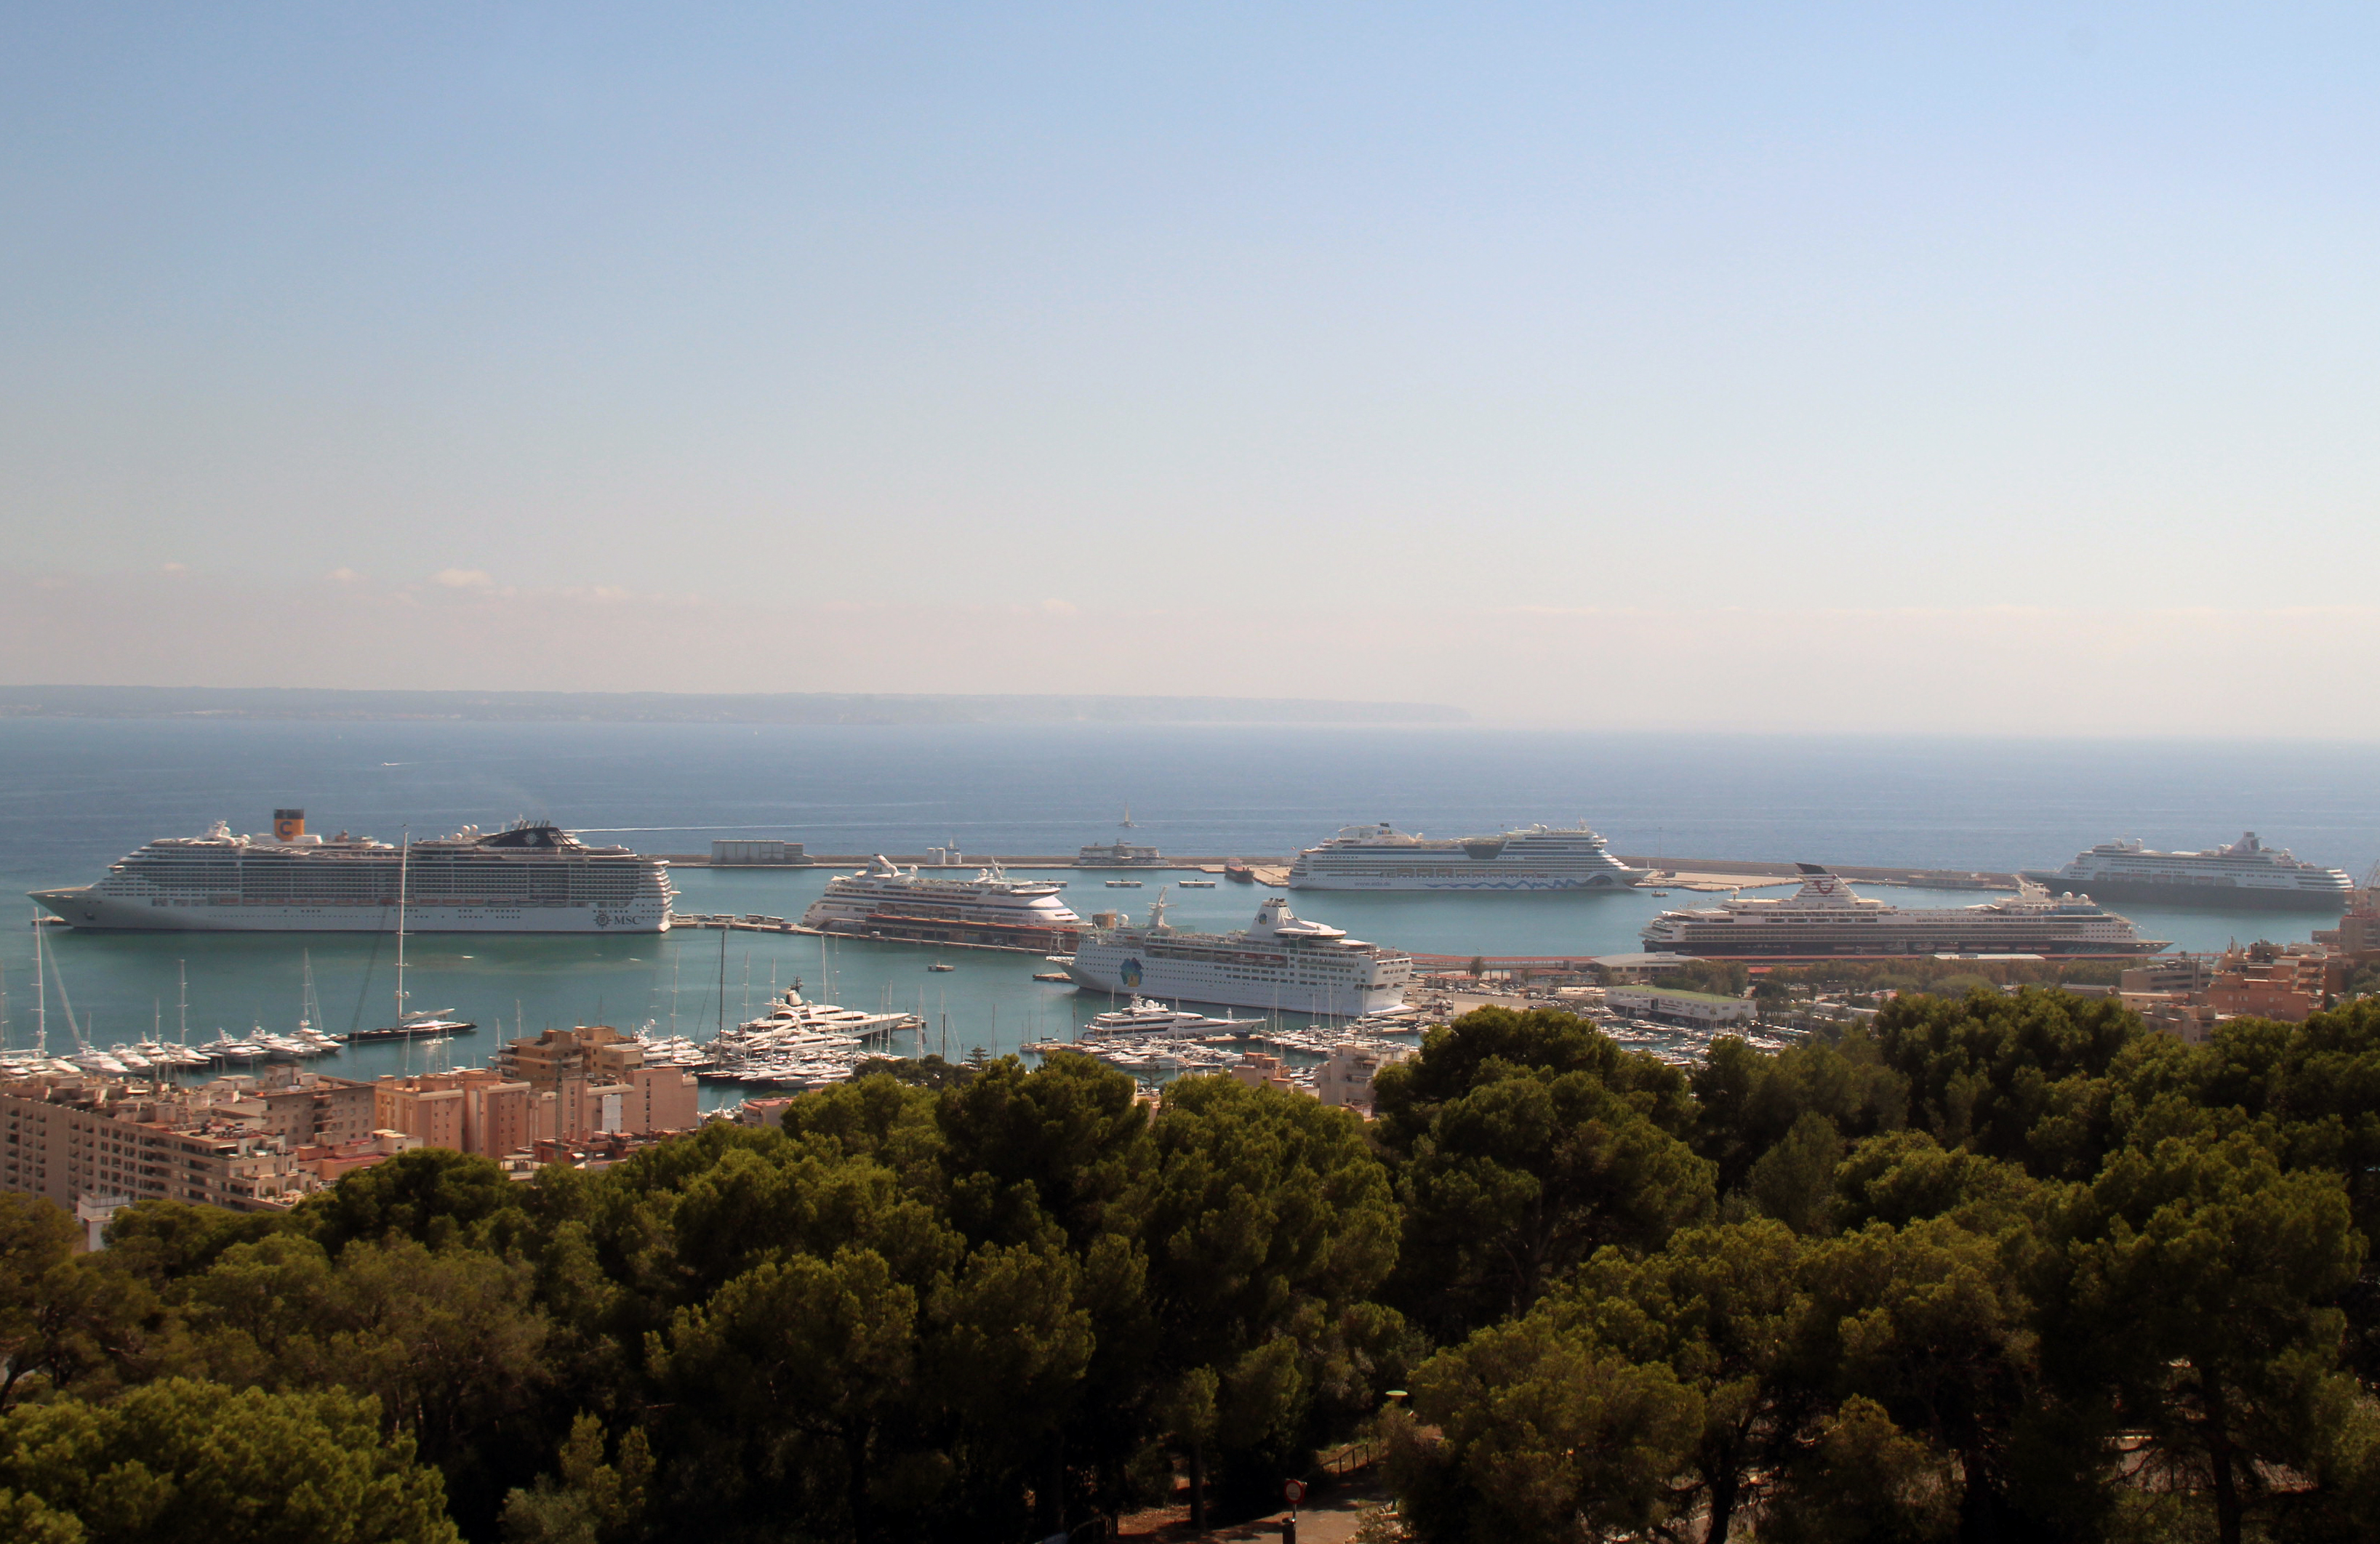 7 cruise ships in Palma’s port